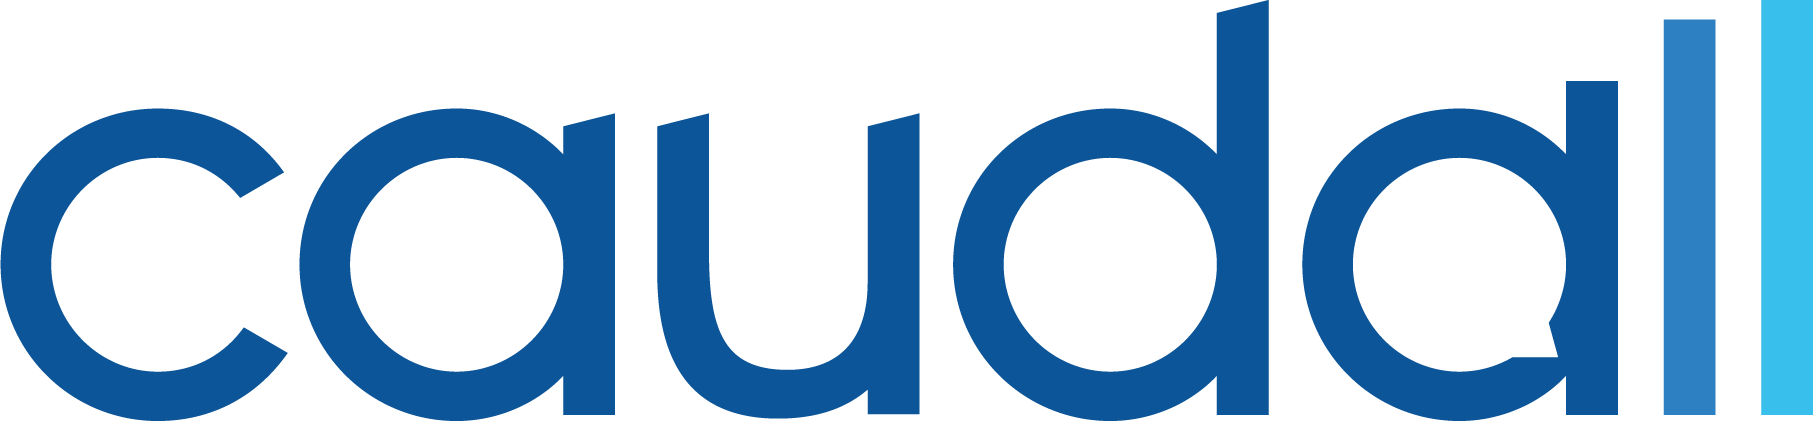 Caudall-Logo